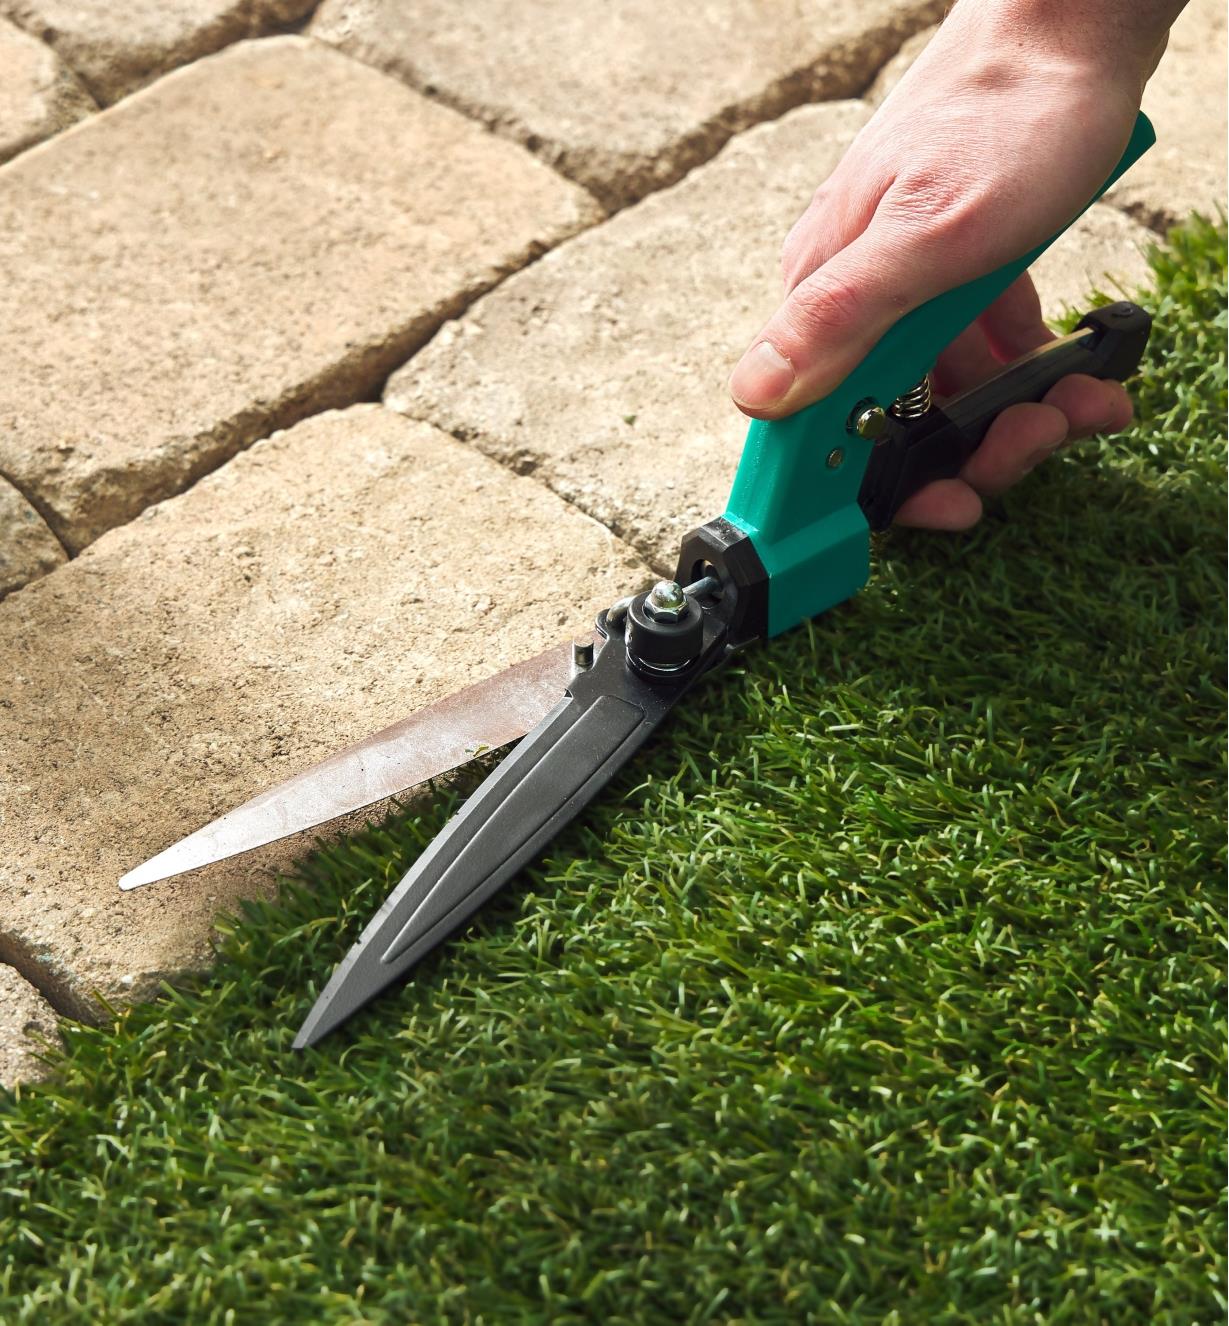 Using adjustable grass shears to trim grass beside patio stones